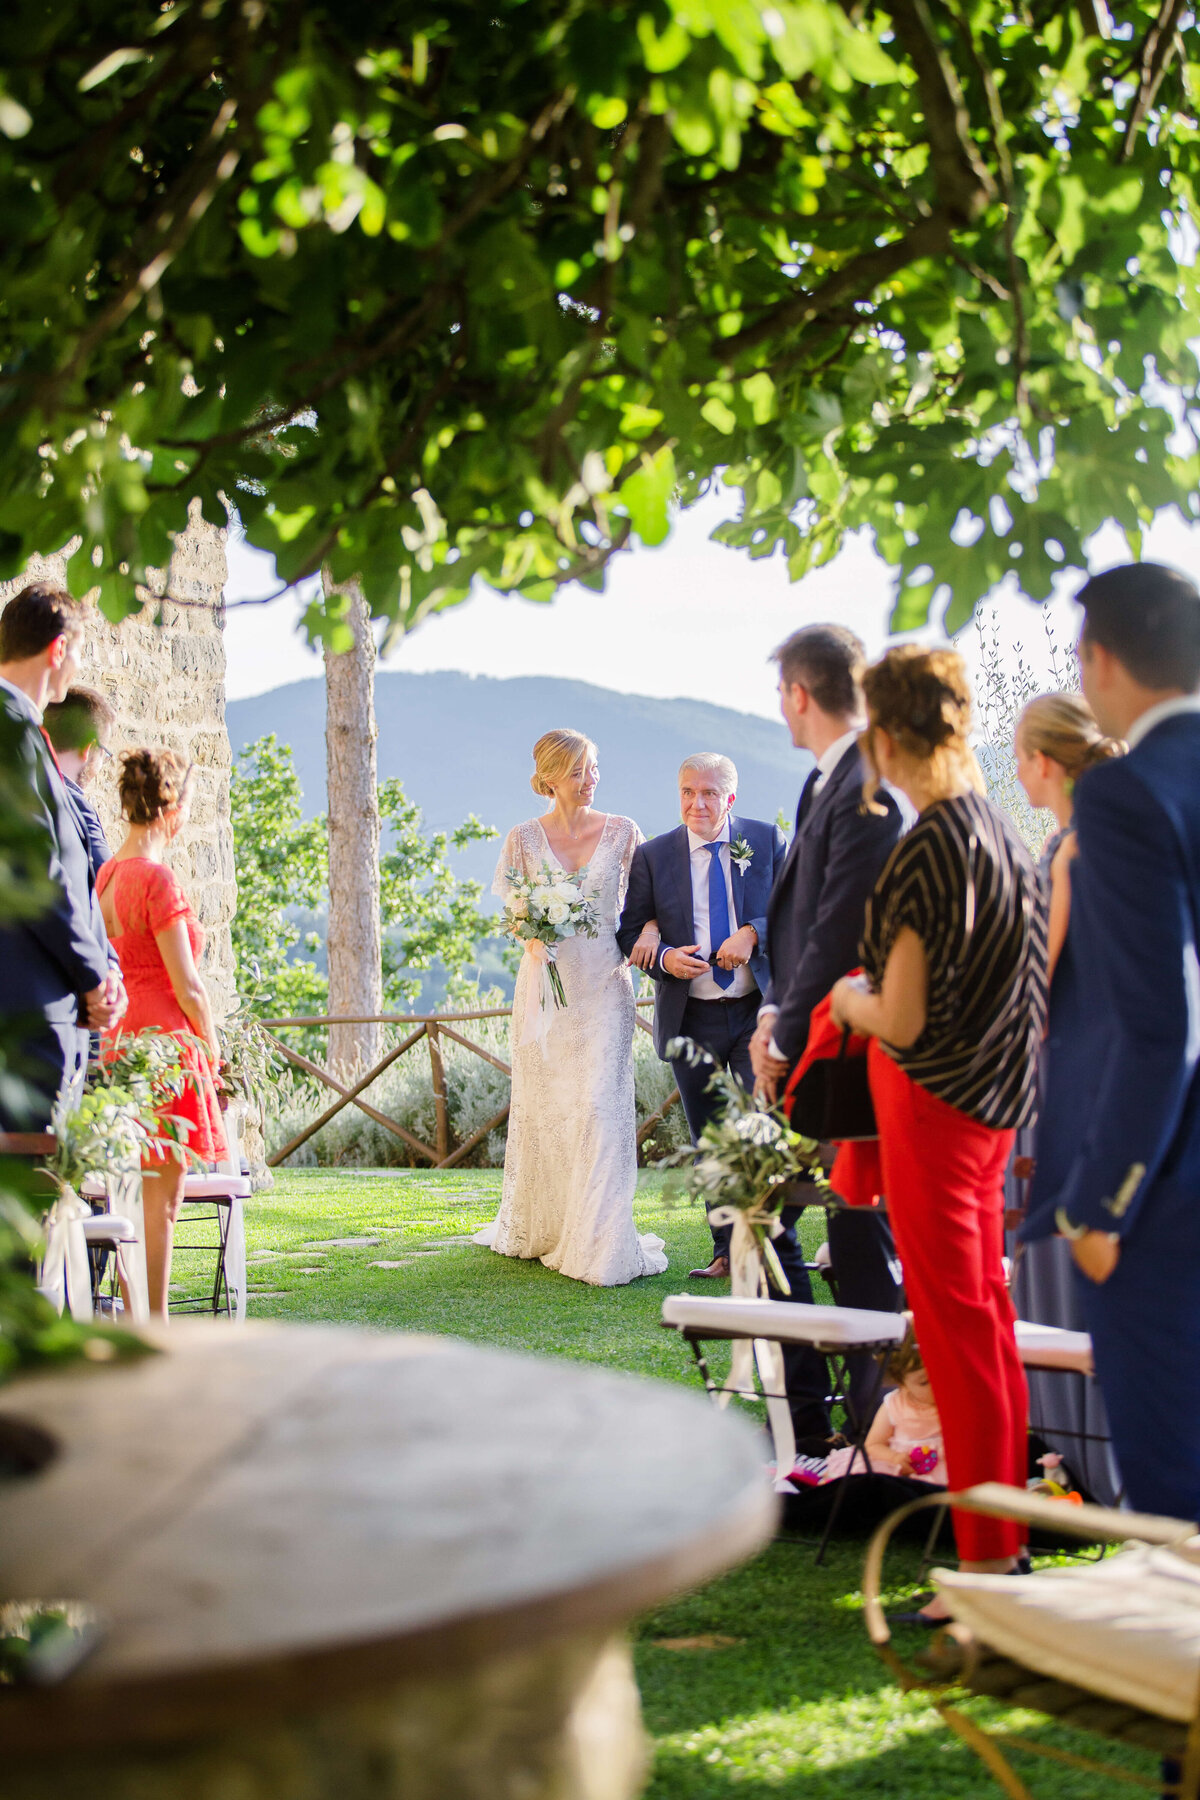 Wedding C&B - Umbria - Italy 2019 24